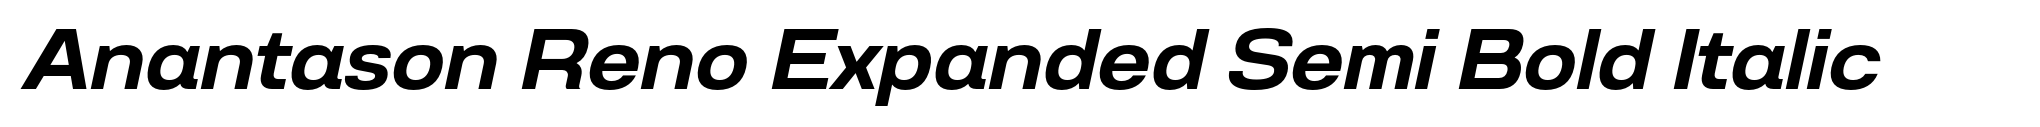 Anantason Reno Expanded Semi Bold Italic image